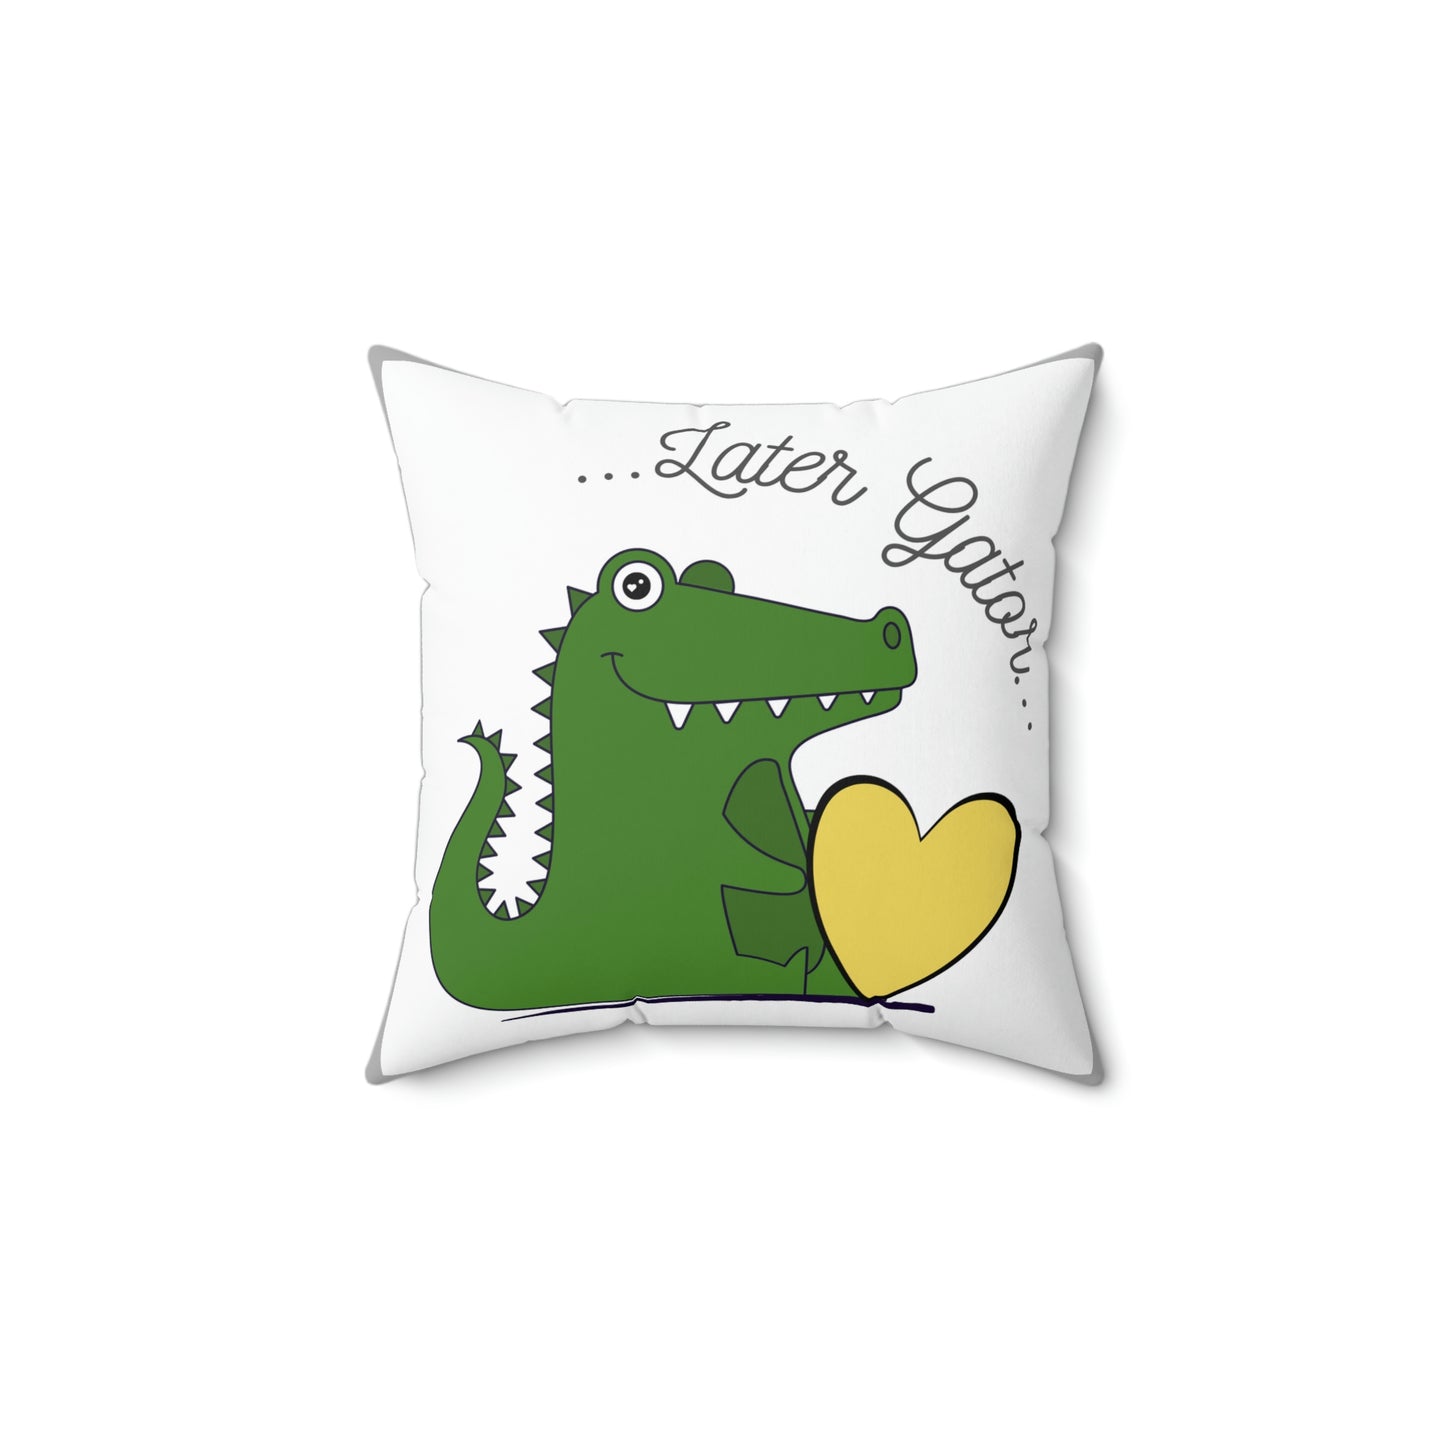 Alligator, Gator, holding heart,  Square Pillow, Valentine